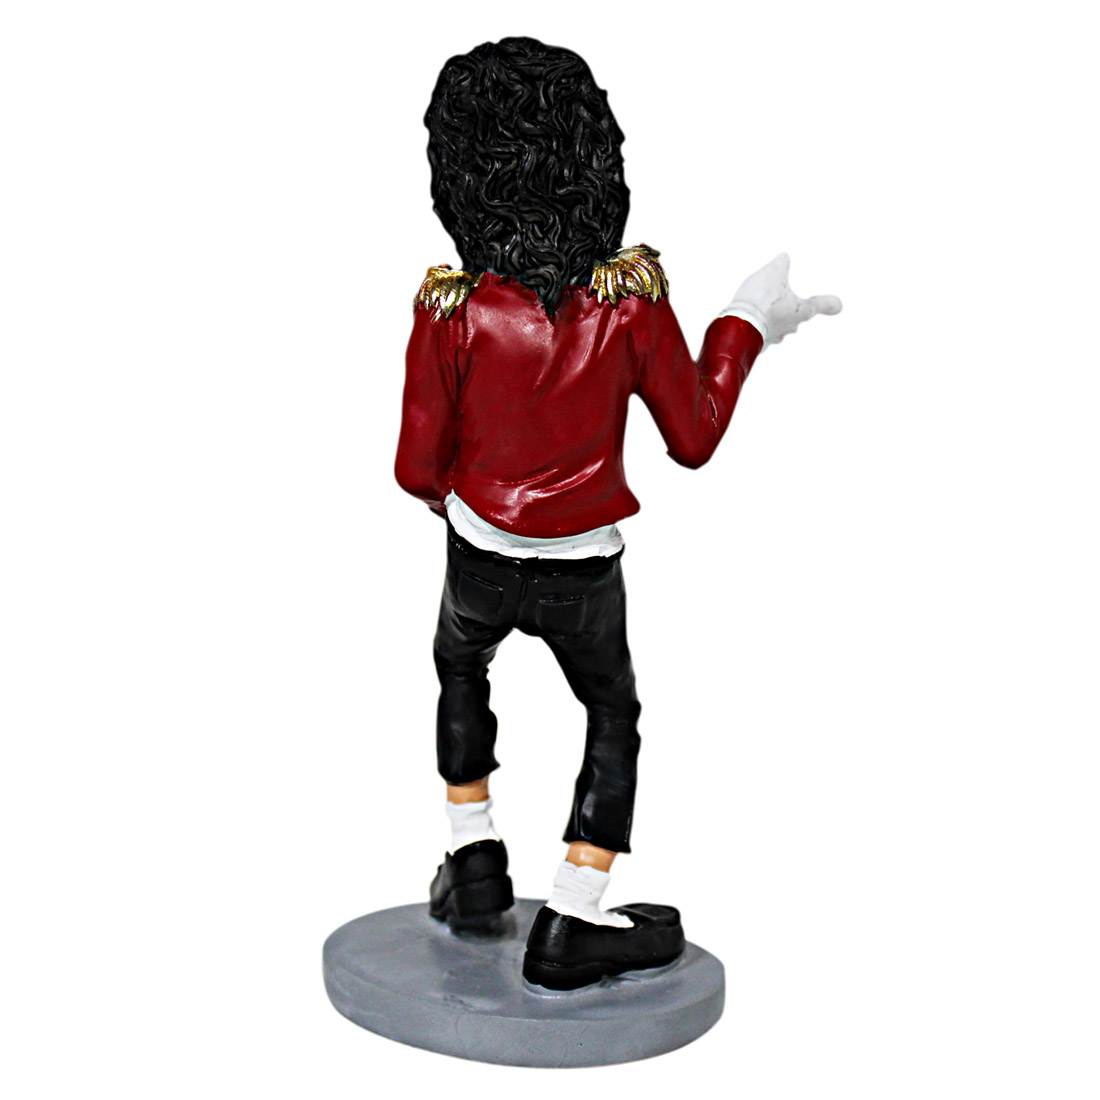 ORKA Decorative Showpiece Figurine - Michael Jackson